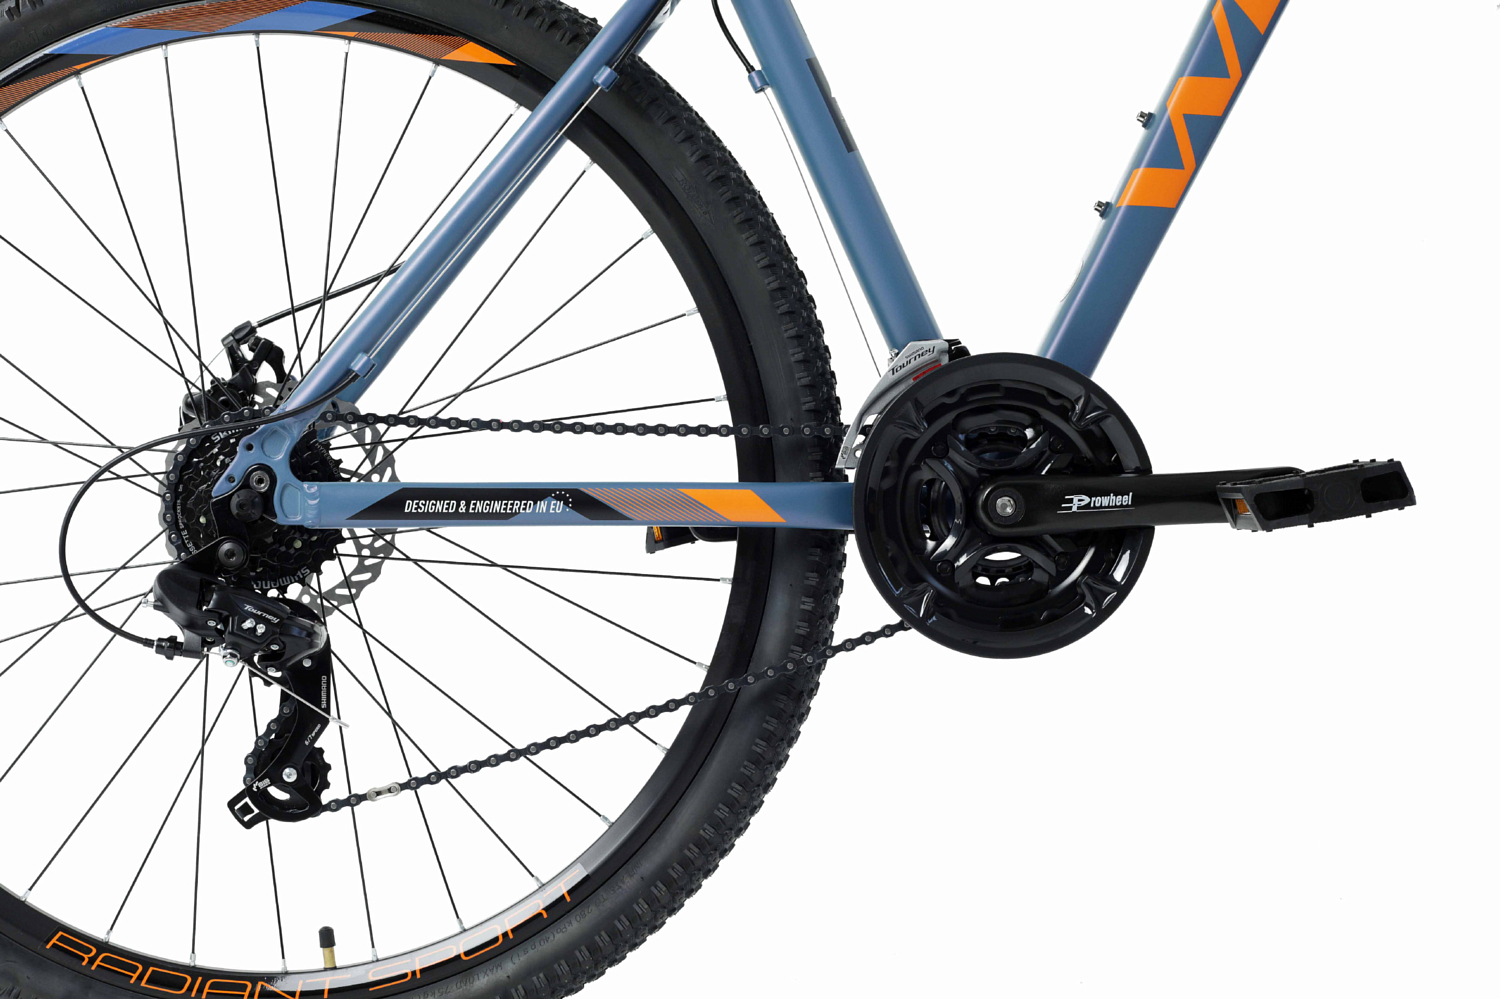 Велосипед Welt Ridge 1.0 D 29 2022 Dark Blue